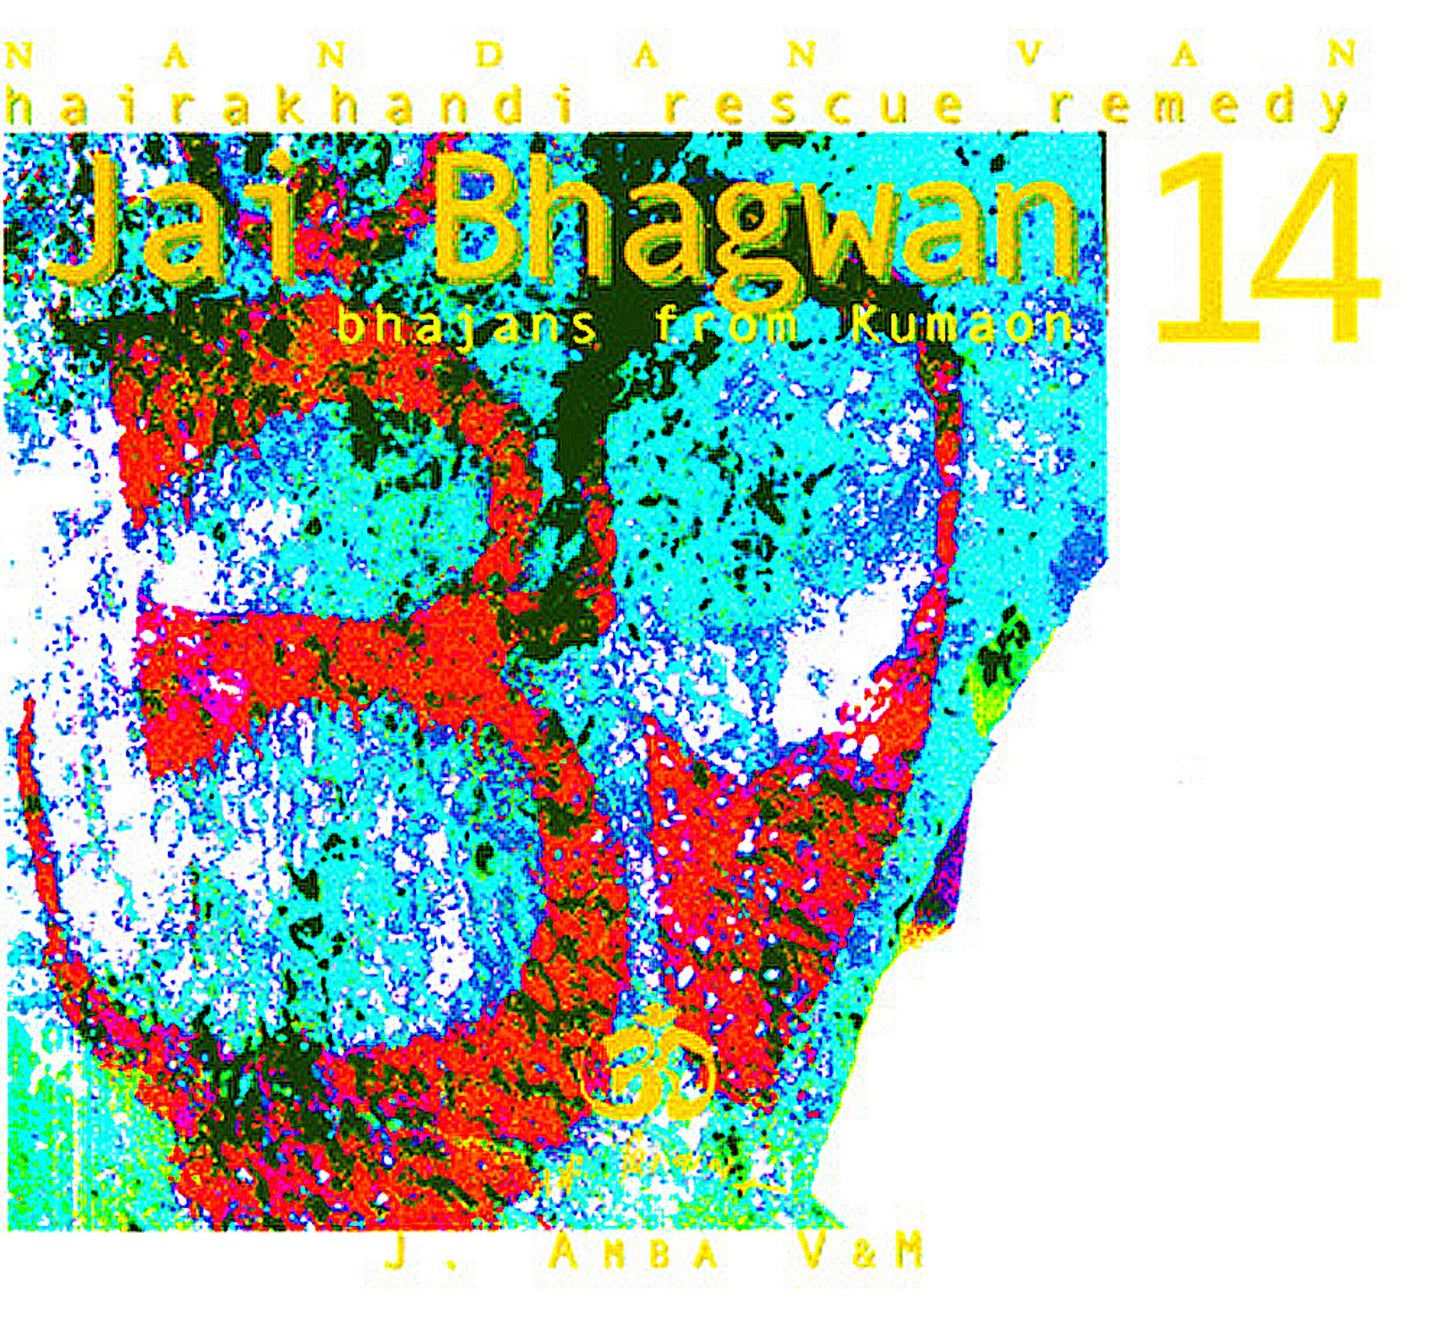 Jai Bhagwan, Kumaon Bhajans - Sanatan Dharma Spirituality Music Therapy for Meditation